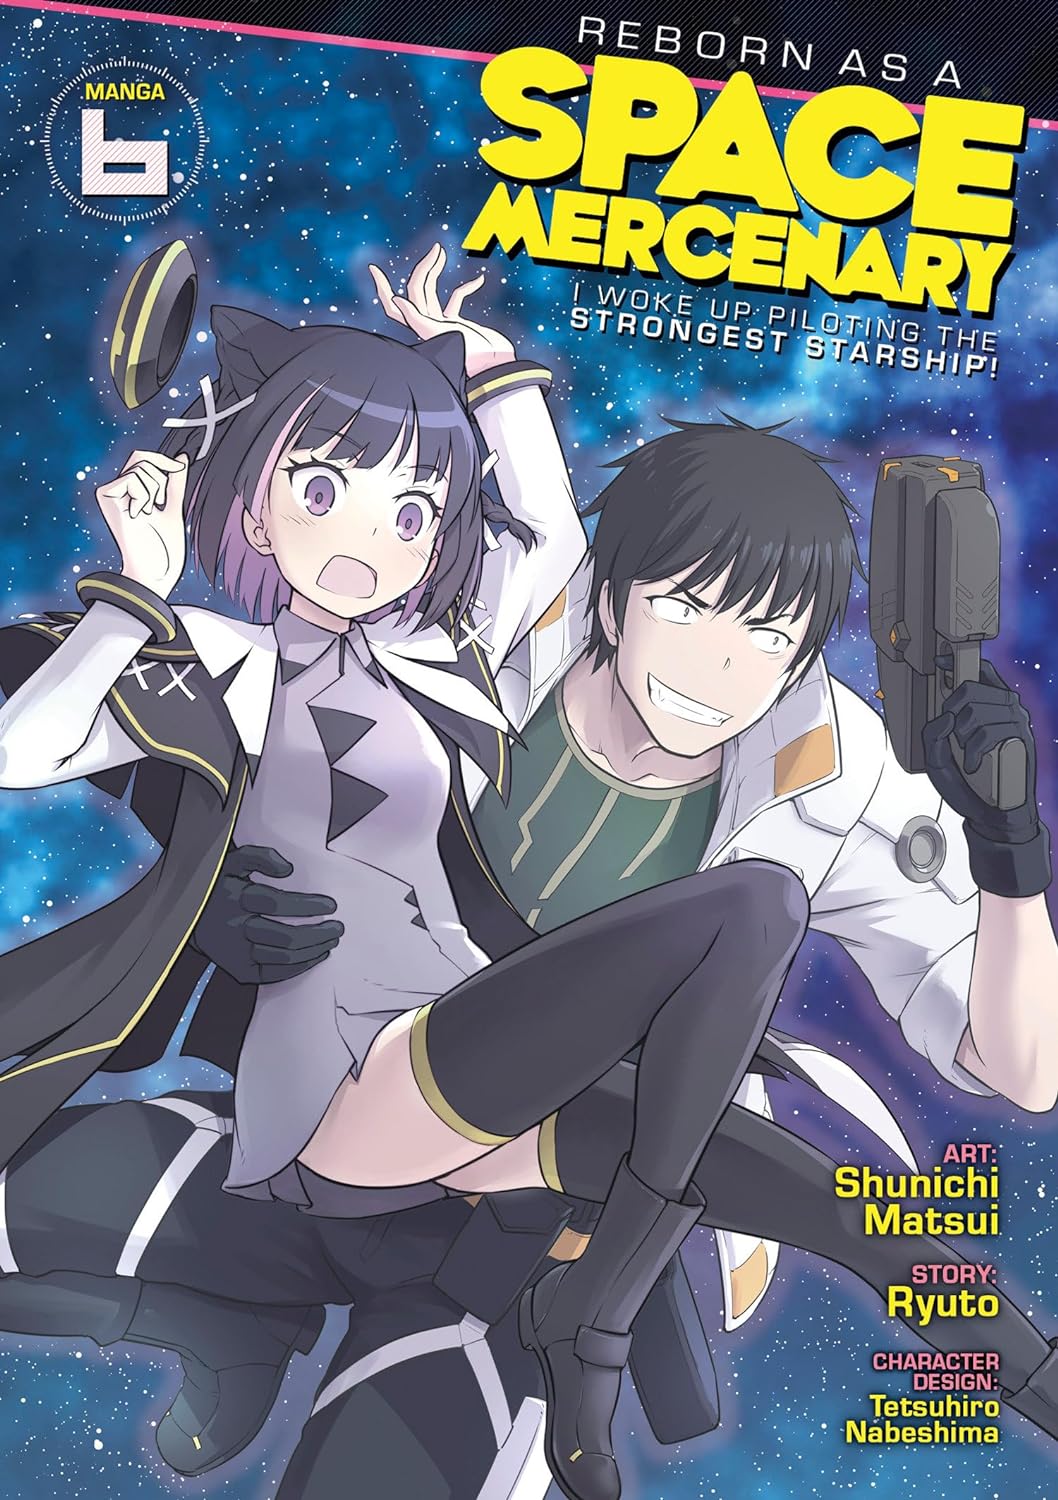 (16/01/2024) Reborn as a Space Mercenary: I Woke Up Piloting the Strongest Starship! (Manga) Vol. 06